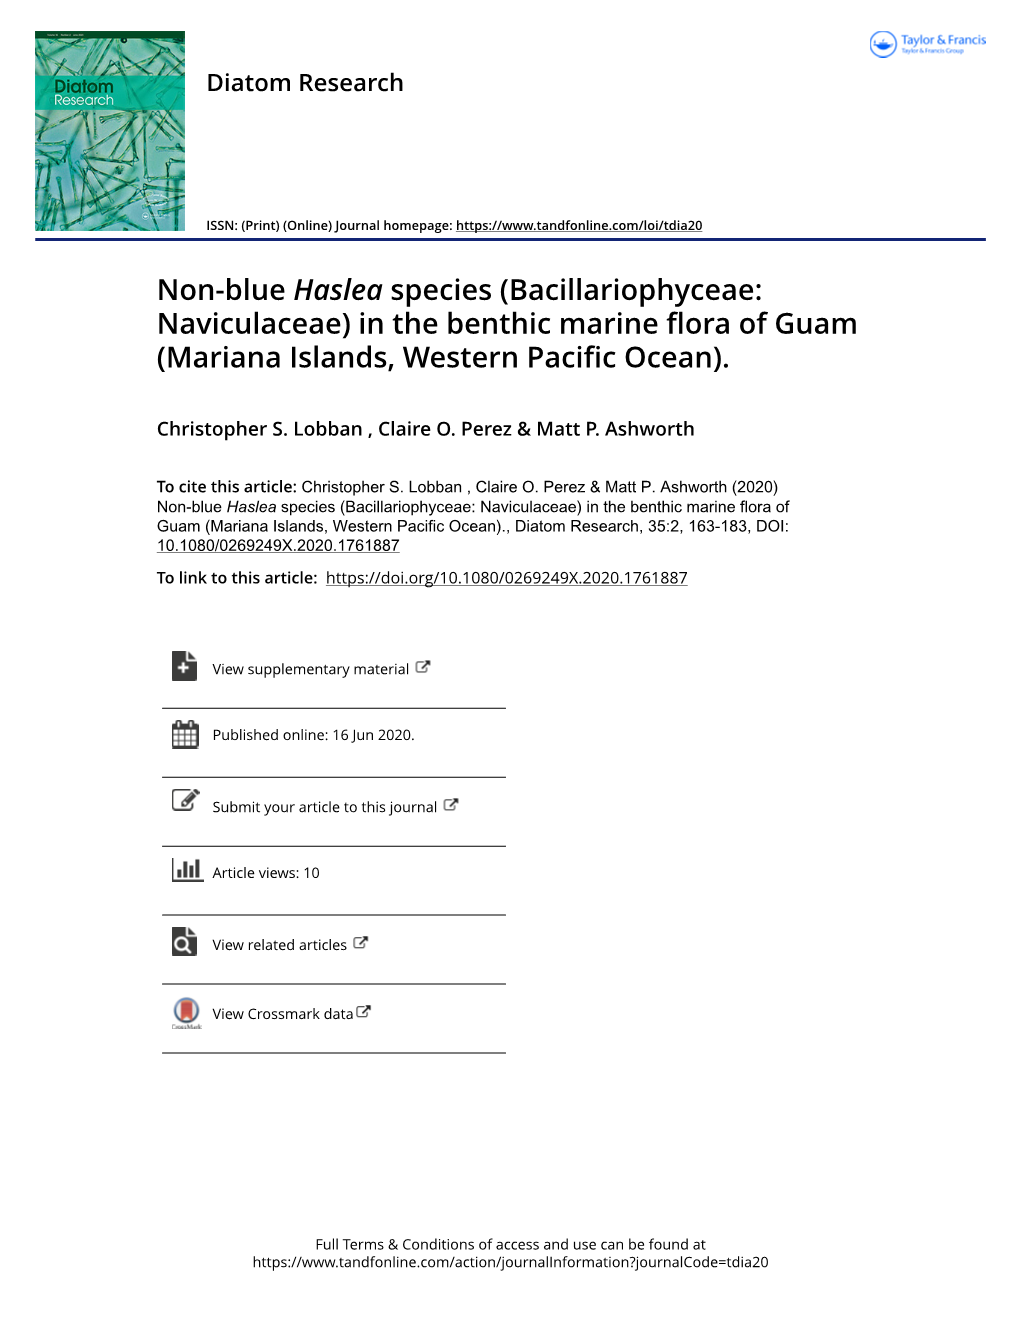 Non-Blue Haslea Species (Bacillariophyceae: Naviculaceae) in the Benthic Marine Flora of Guam (Mariana Islands, Western Pacific Ocean)